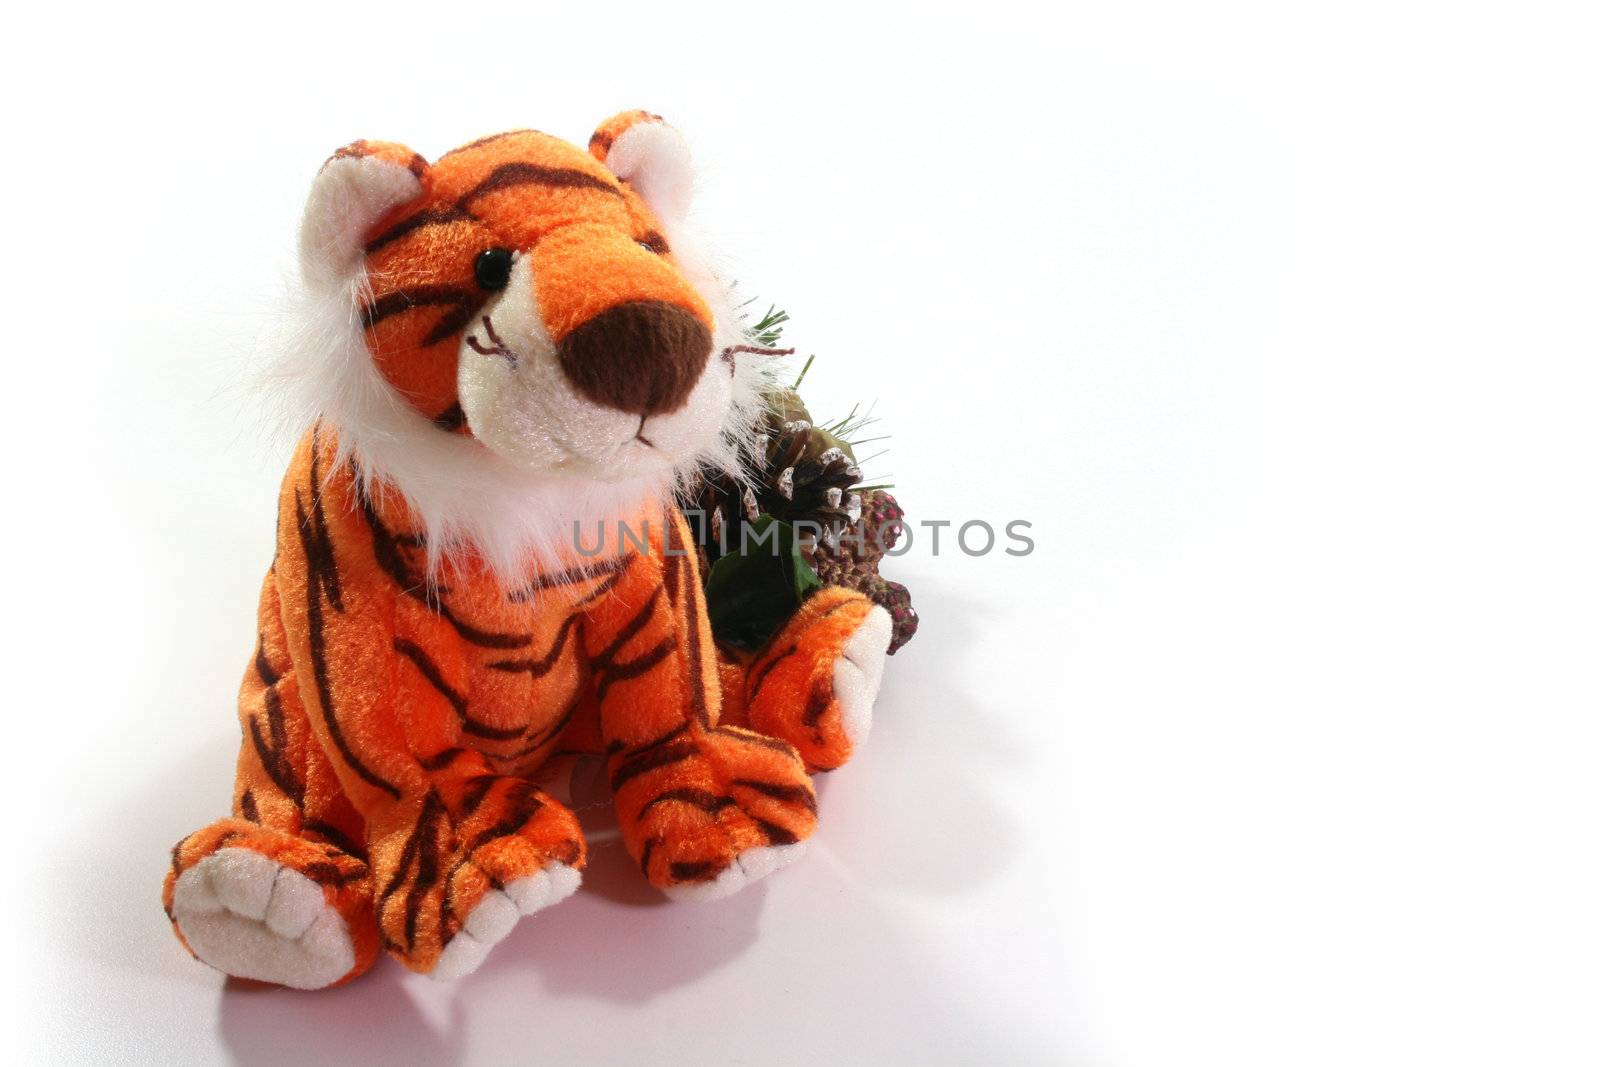 Soft toy a tiger - a symbol of 2010 on east calendar.